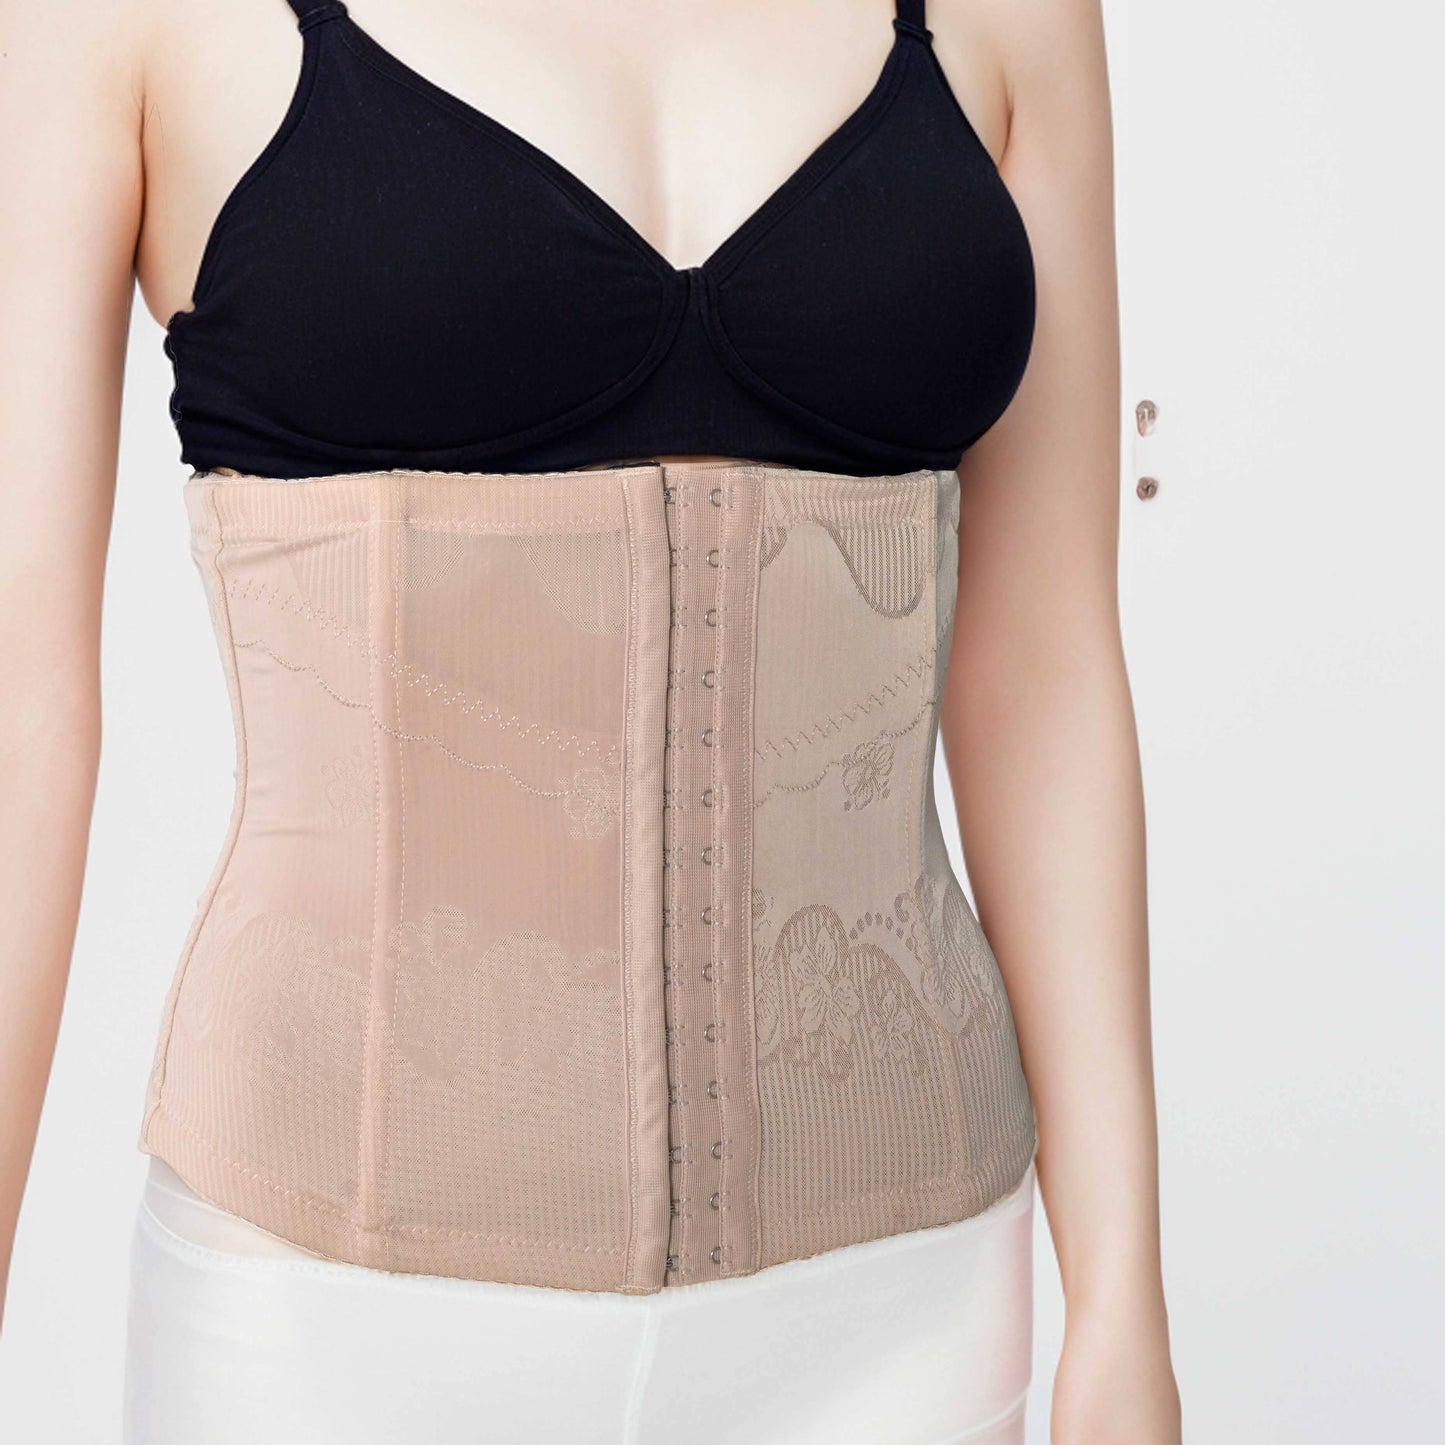 Women's Floral Texture Body Shaper Tummy Control Waist Belt Women's Lingerie CPUS 